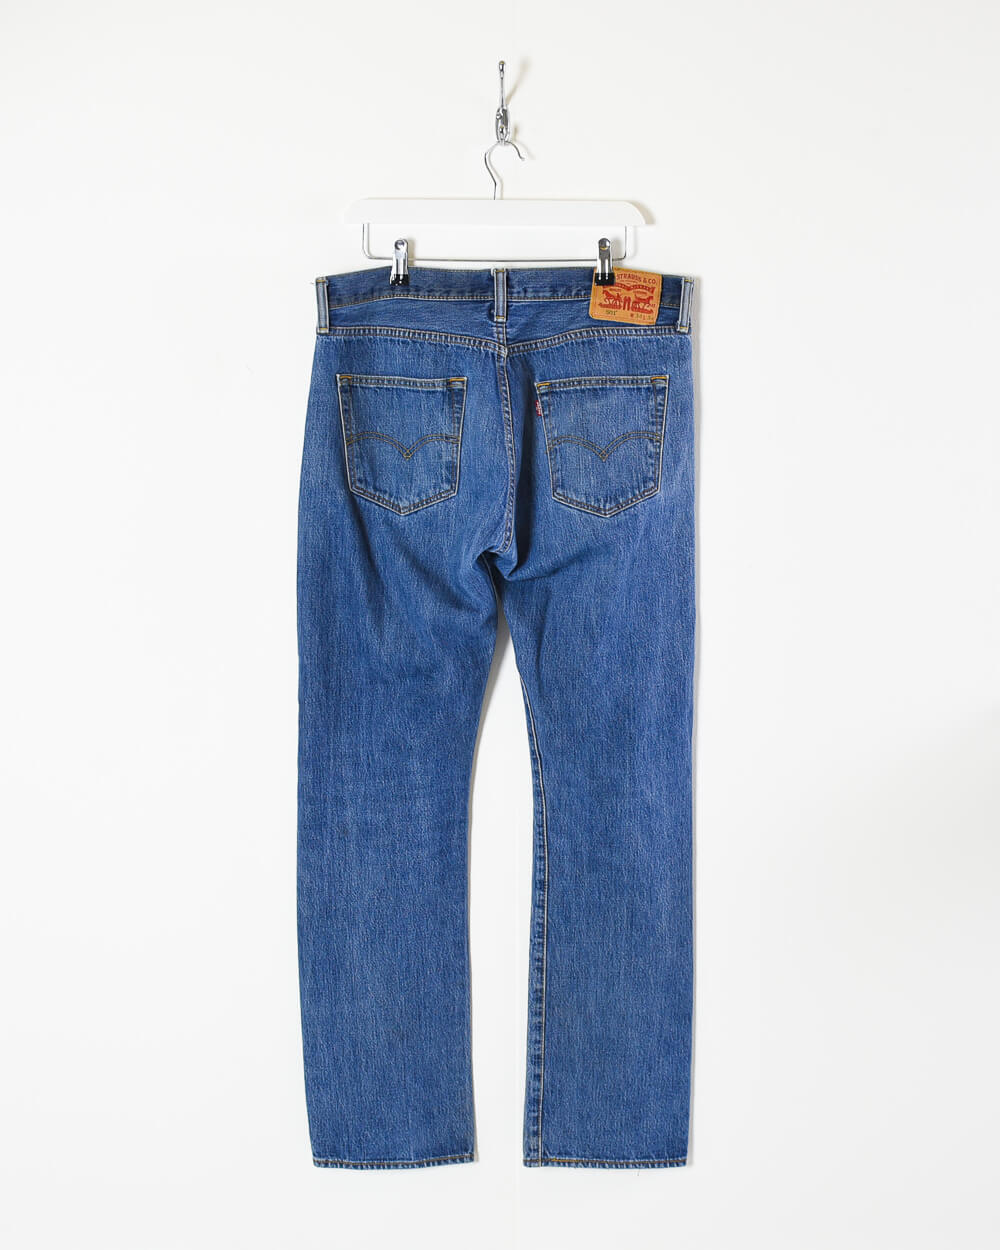 Blue Levi Strauss & Co Jeans - W34 L34